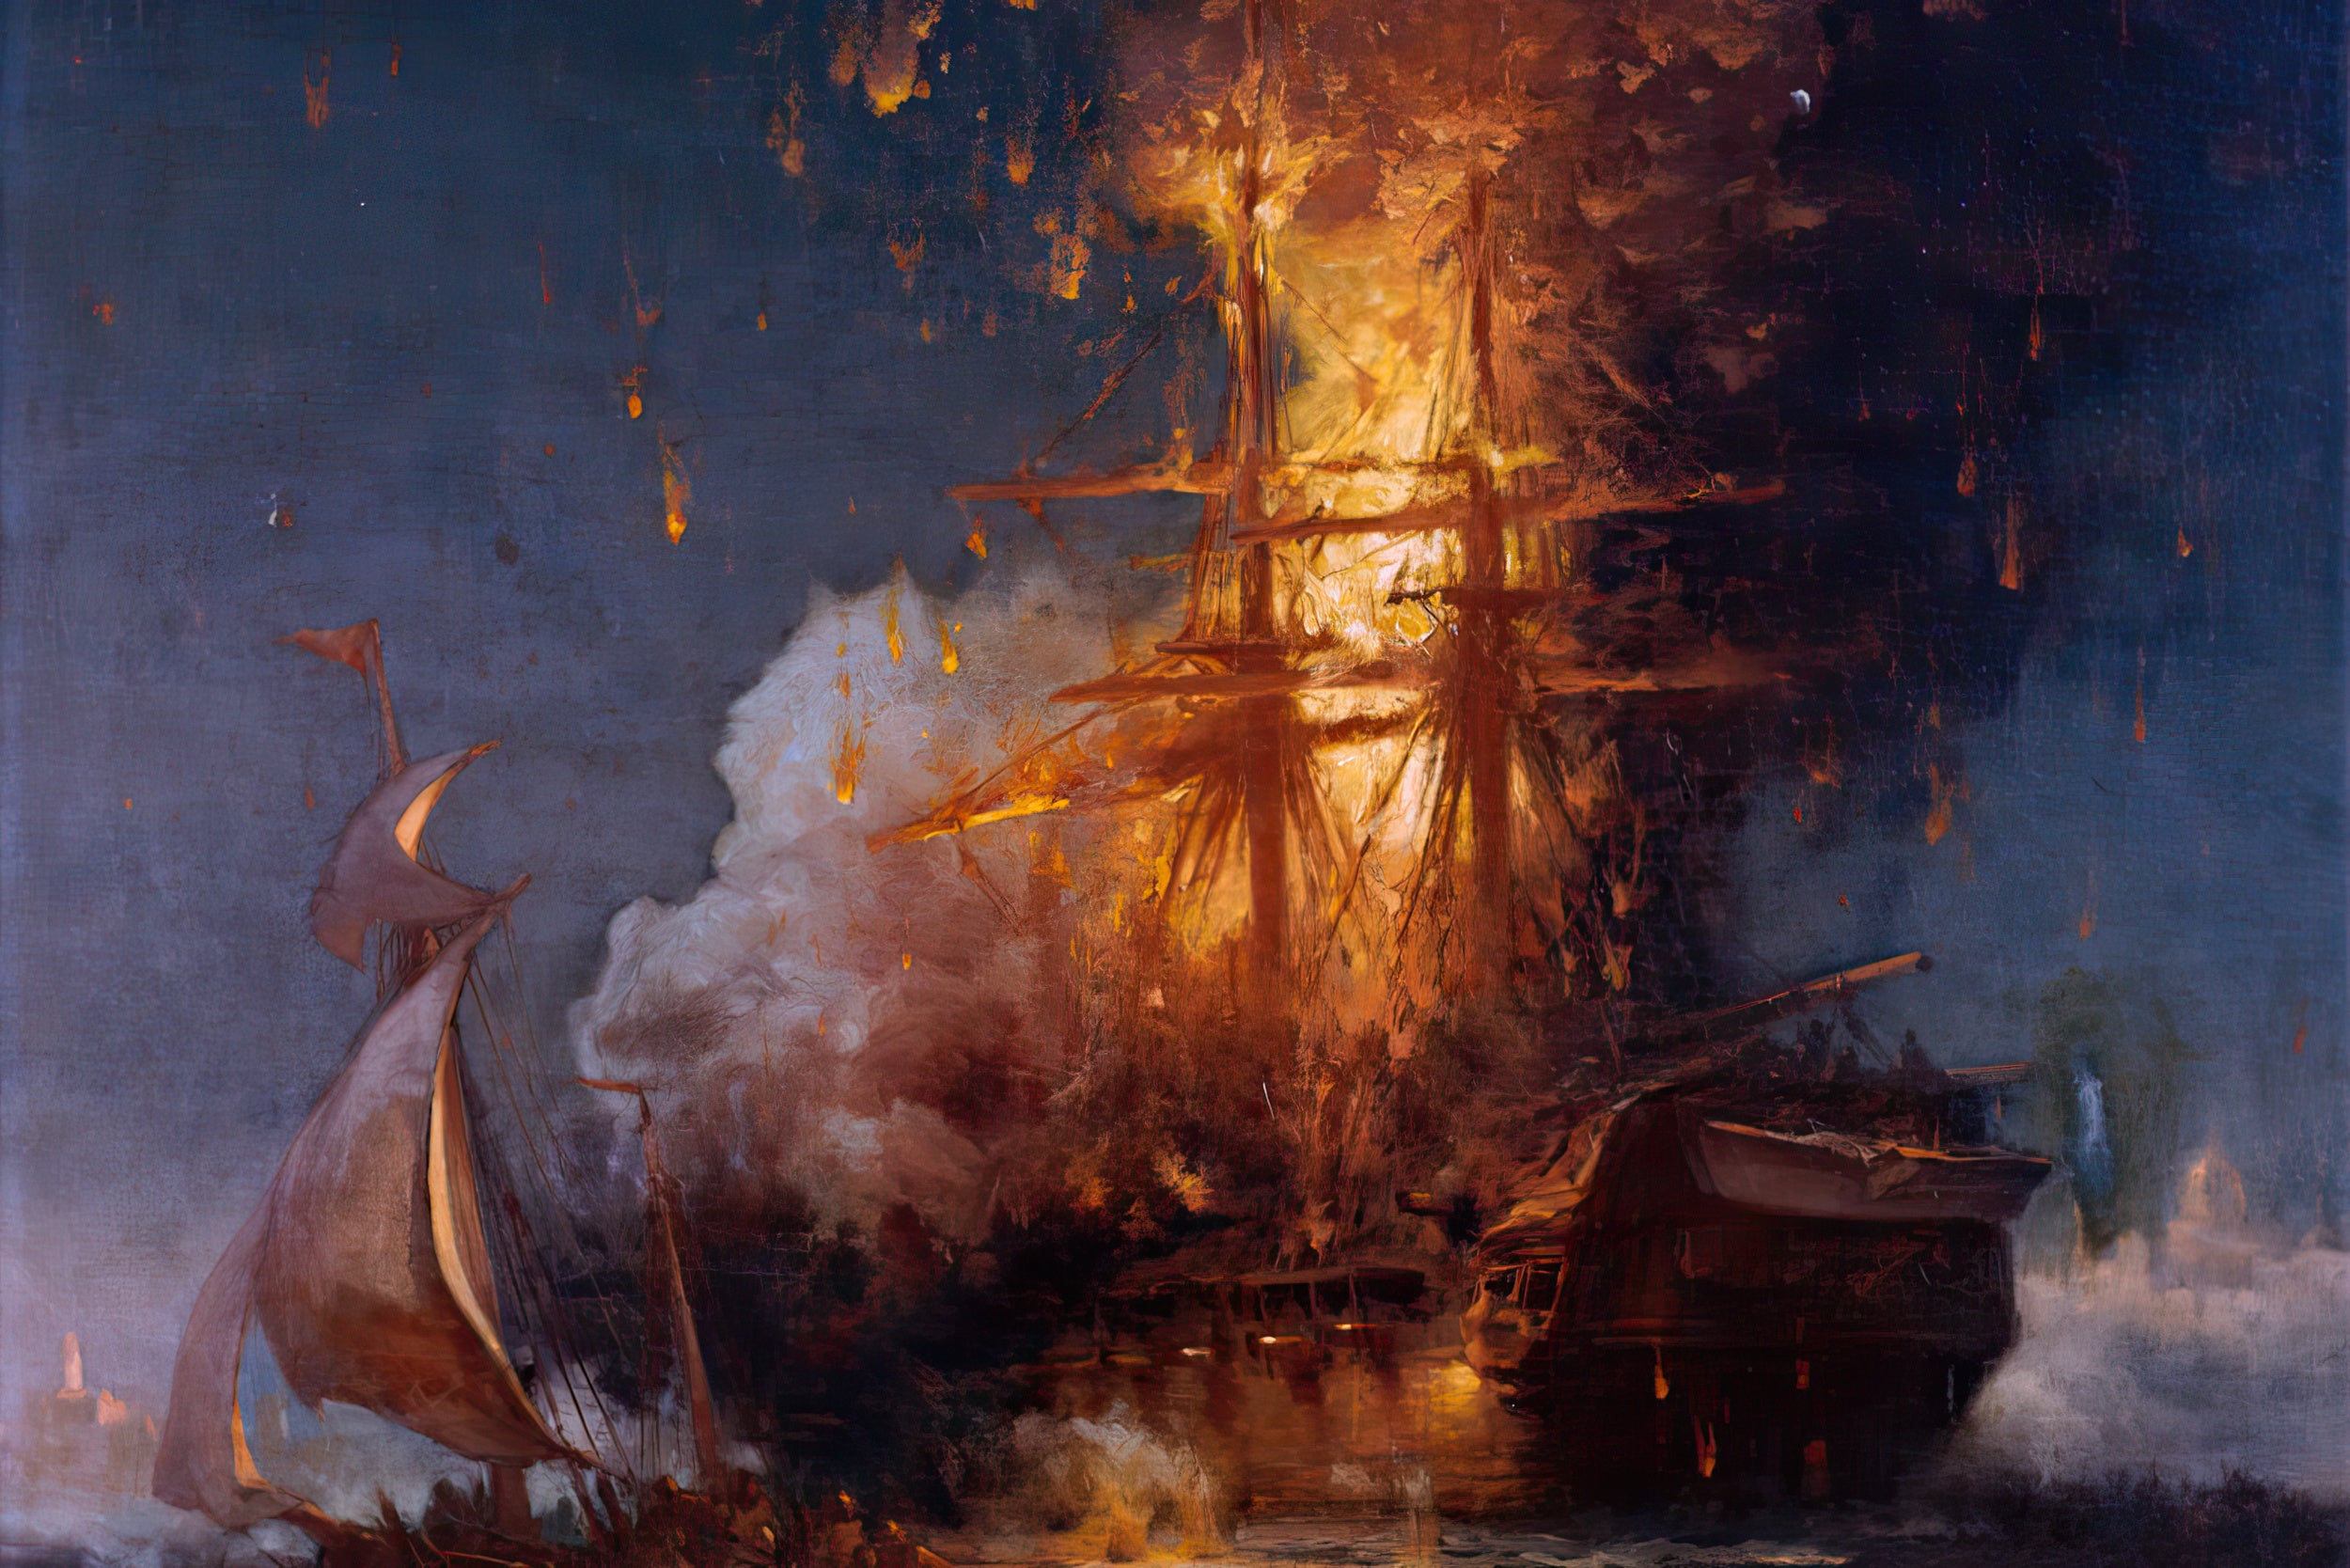 Burning of the Frigate Philadelphia in the Harbor of Tripoli, February 16, 1804 (Painting)